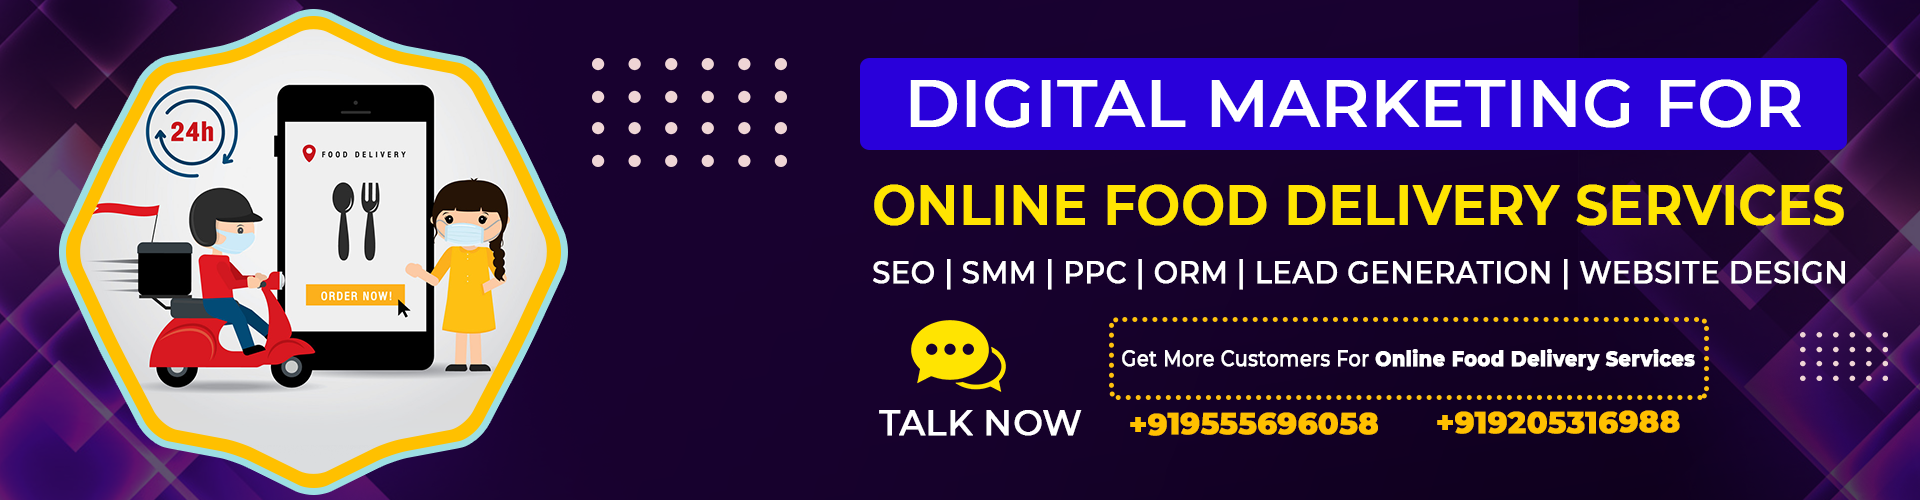 digital-marketing-for-online-food-delivery-services